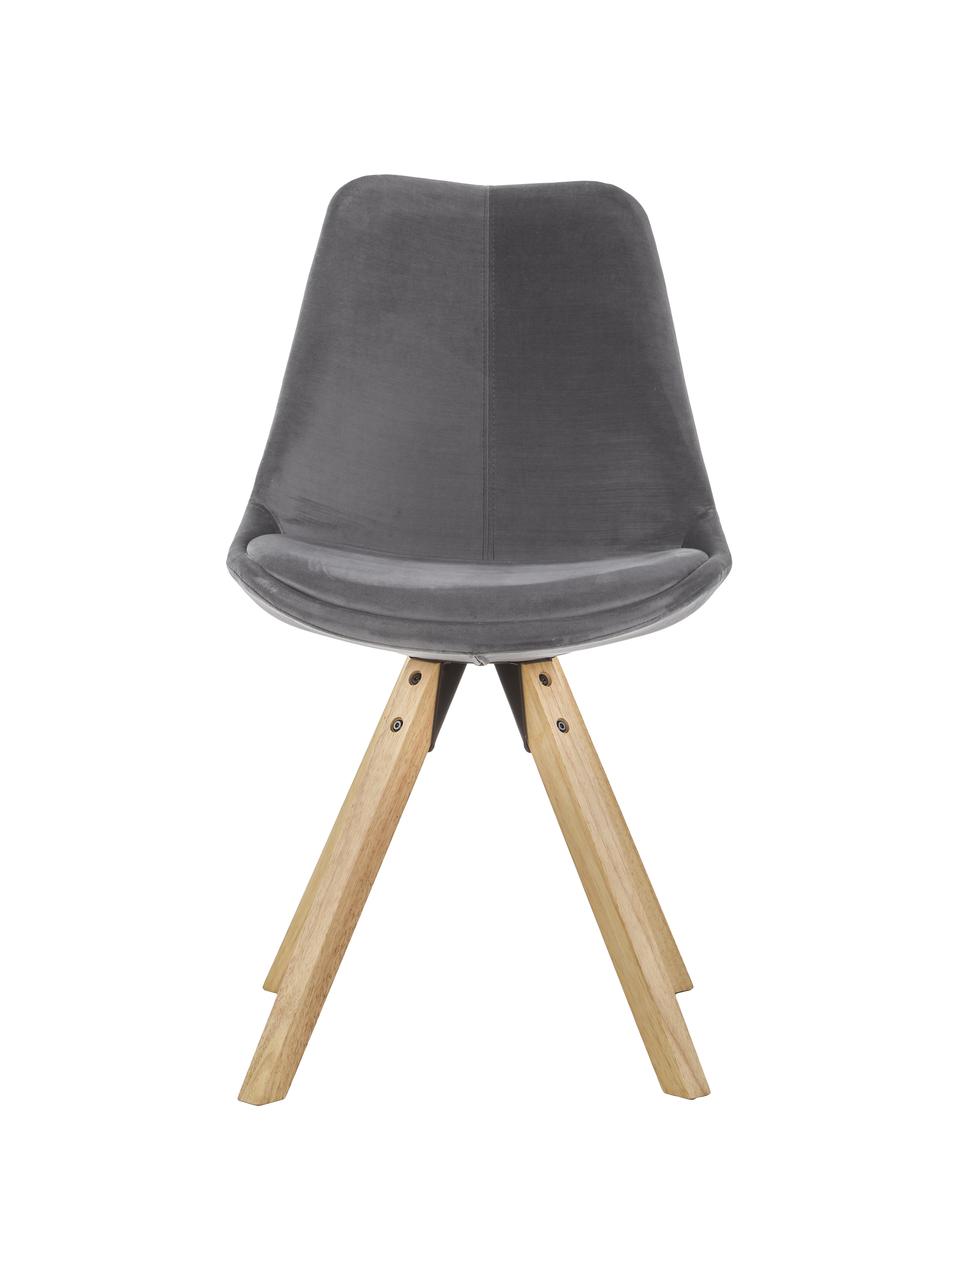 Fluwelen stoelen Dima, 2 stuks, Bekleding: polyester fluweel, Poten: geolied rubberboomhout, Bekleding: donkergrijs. Poten: rubberhout, B 49 x D 55 cm